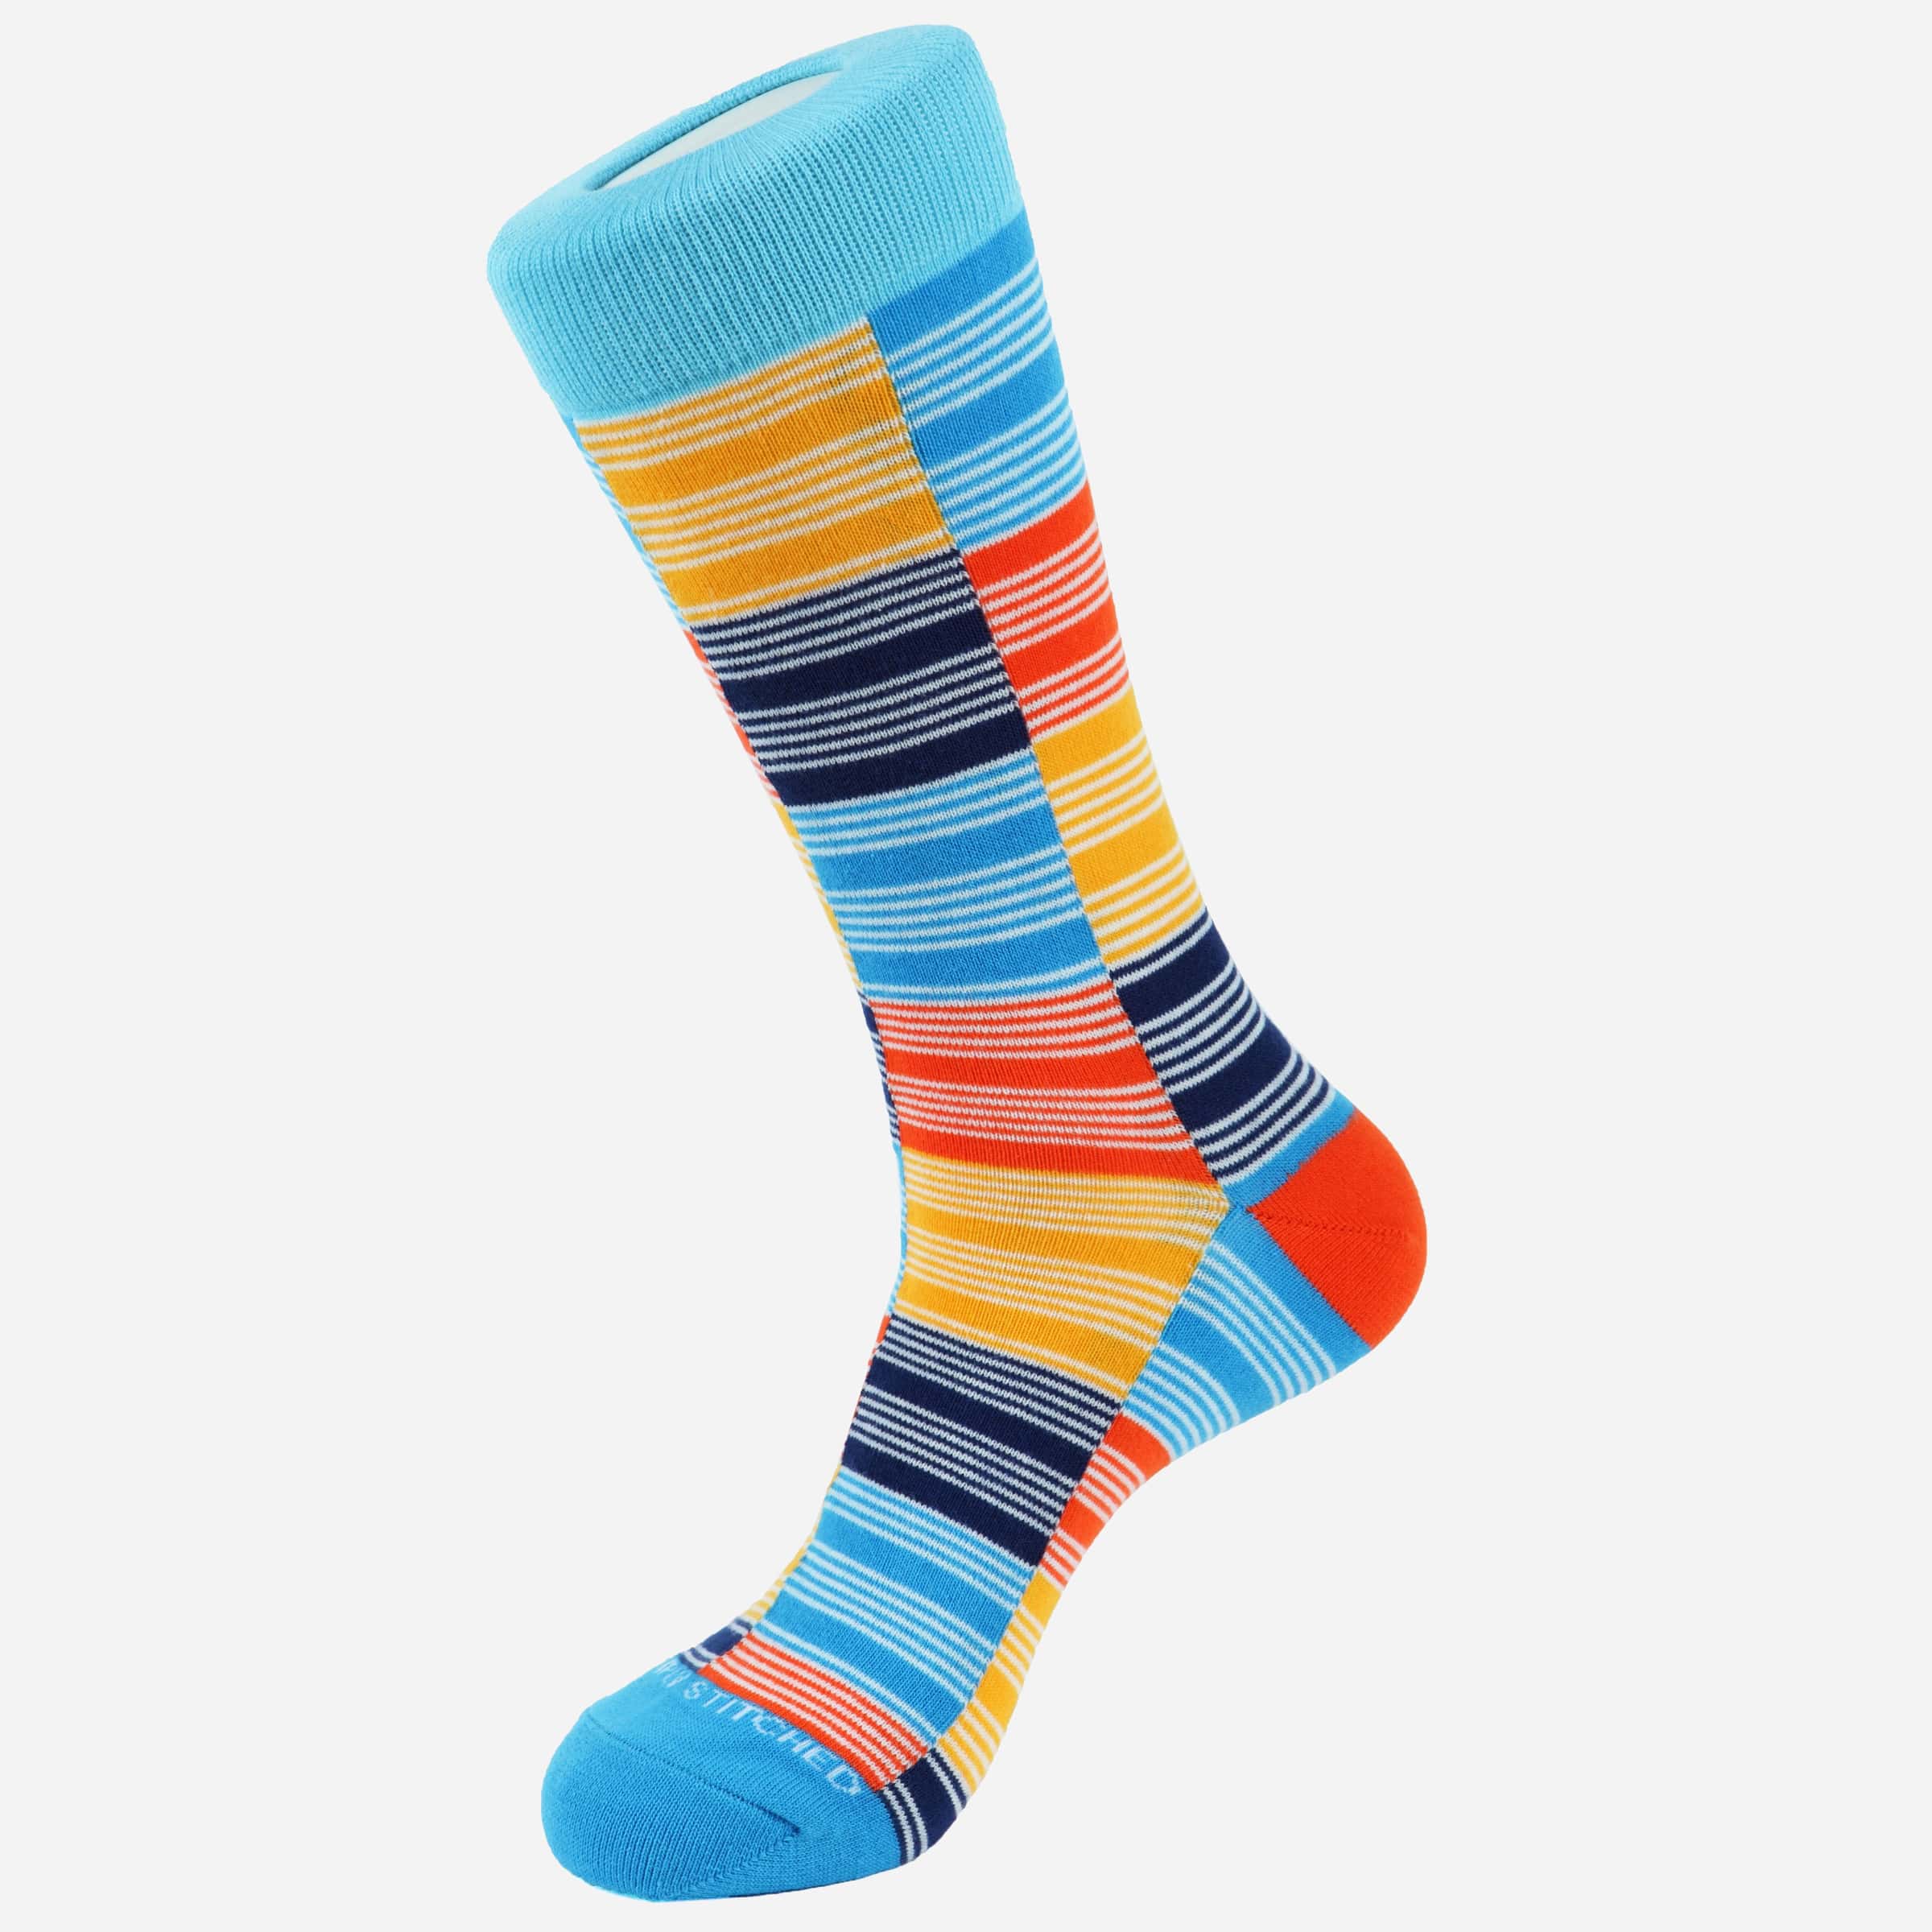 Checker Socks - Men's Socks at Menzclub